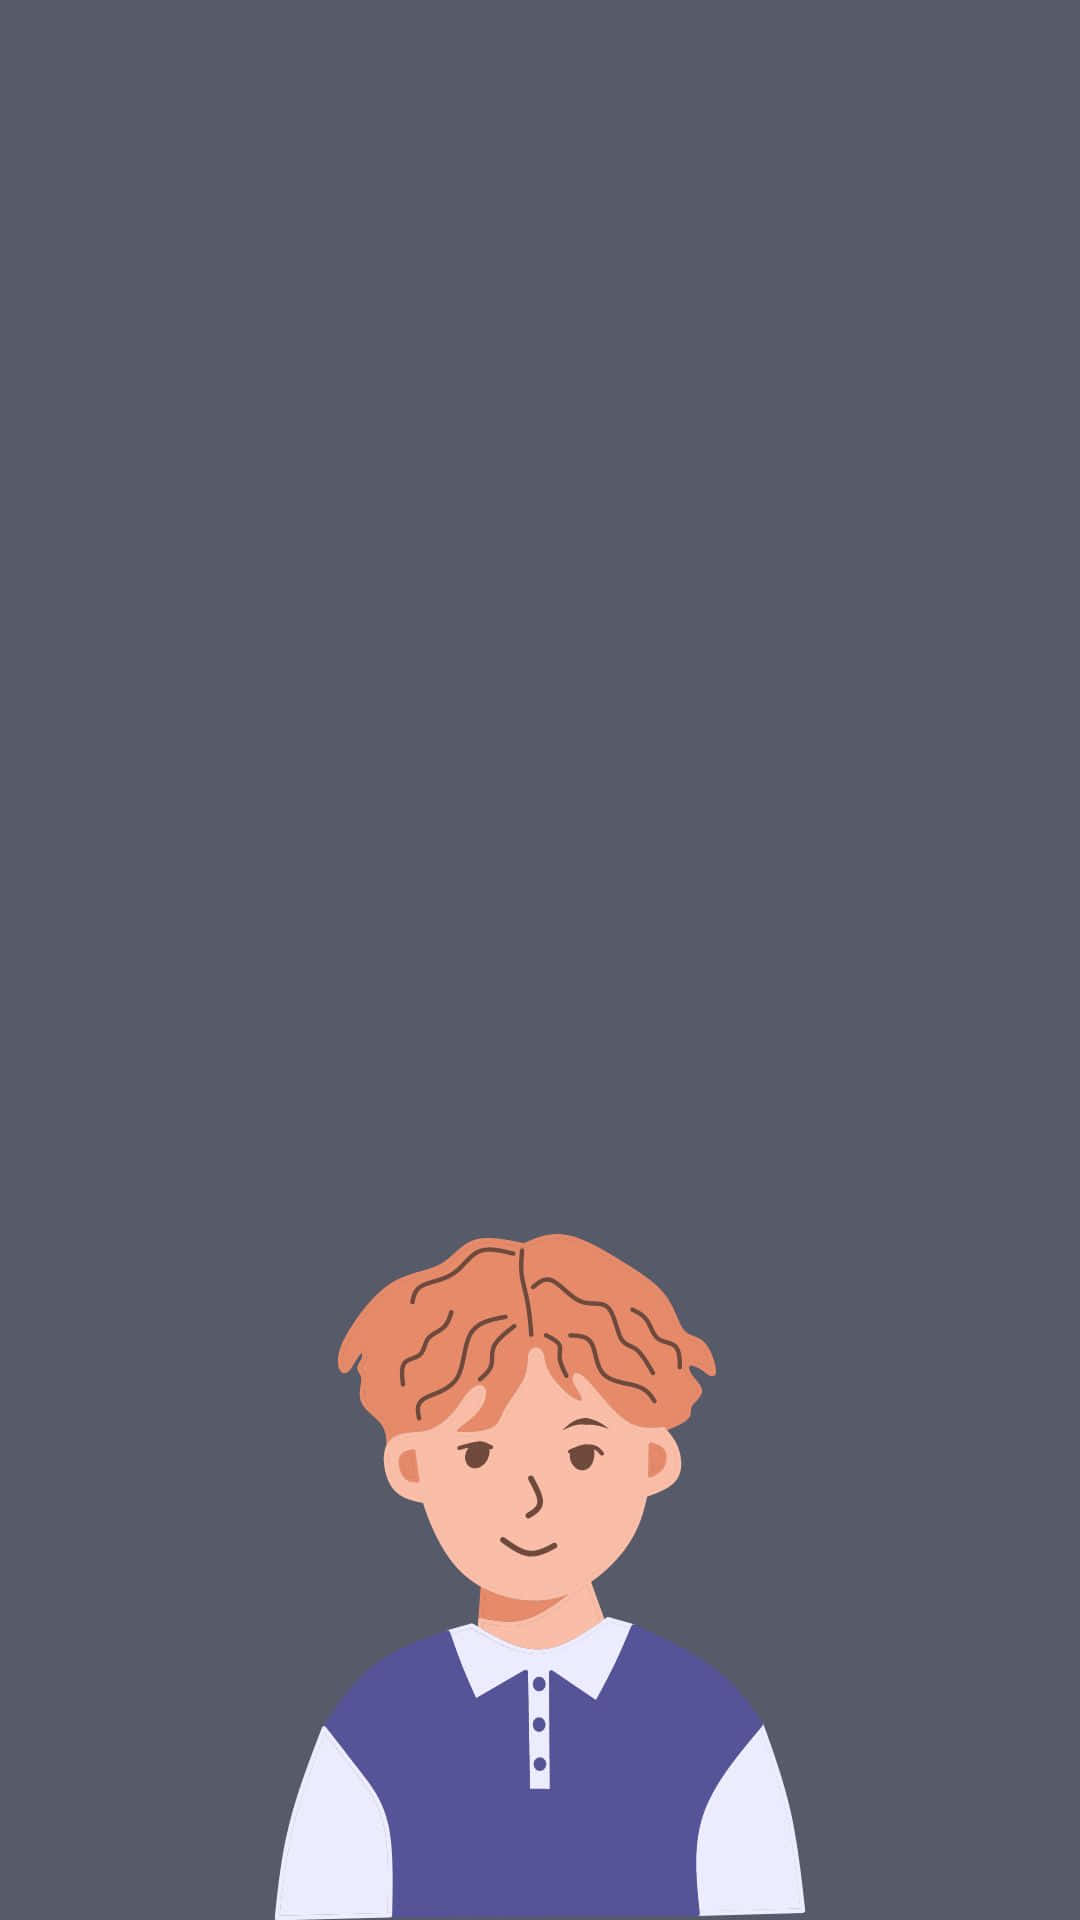 Handsome Boy Cartoon With Ginger Hair Background